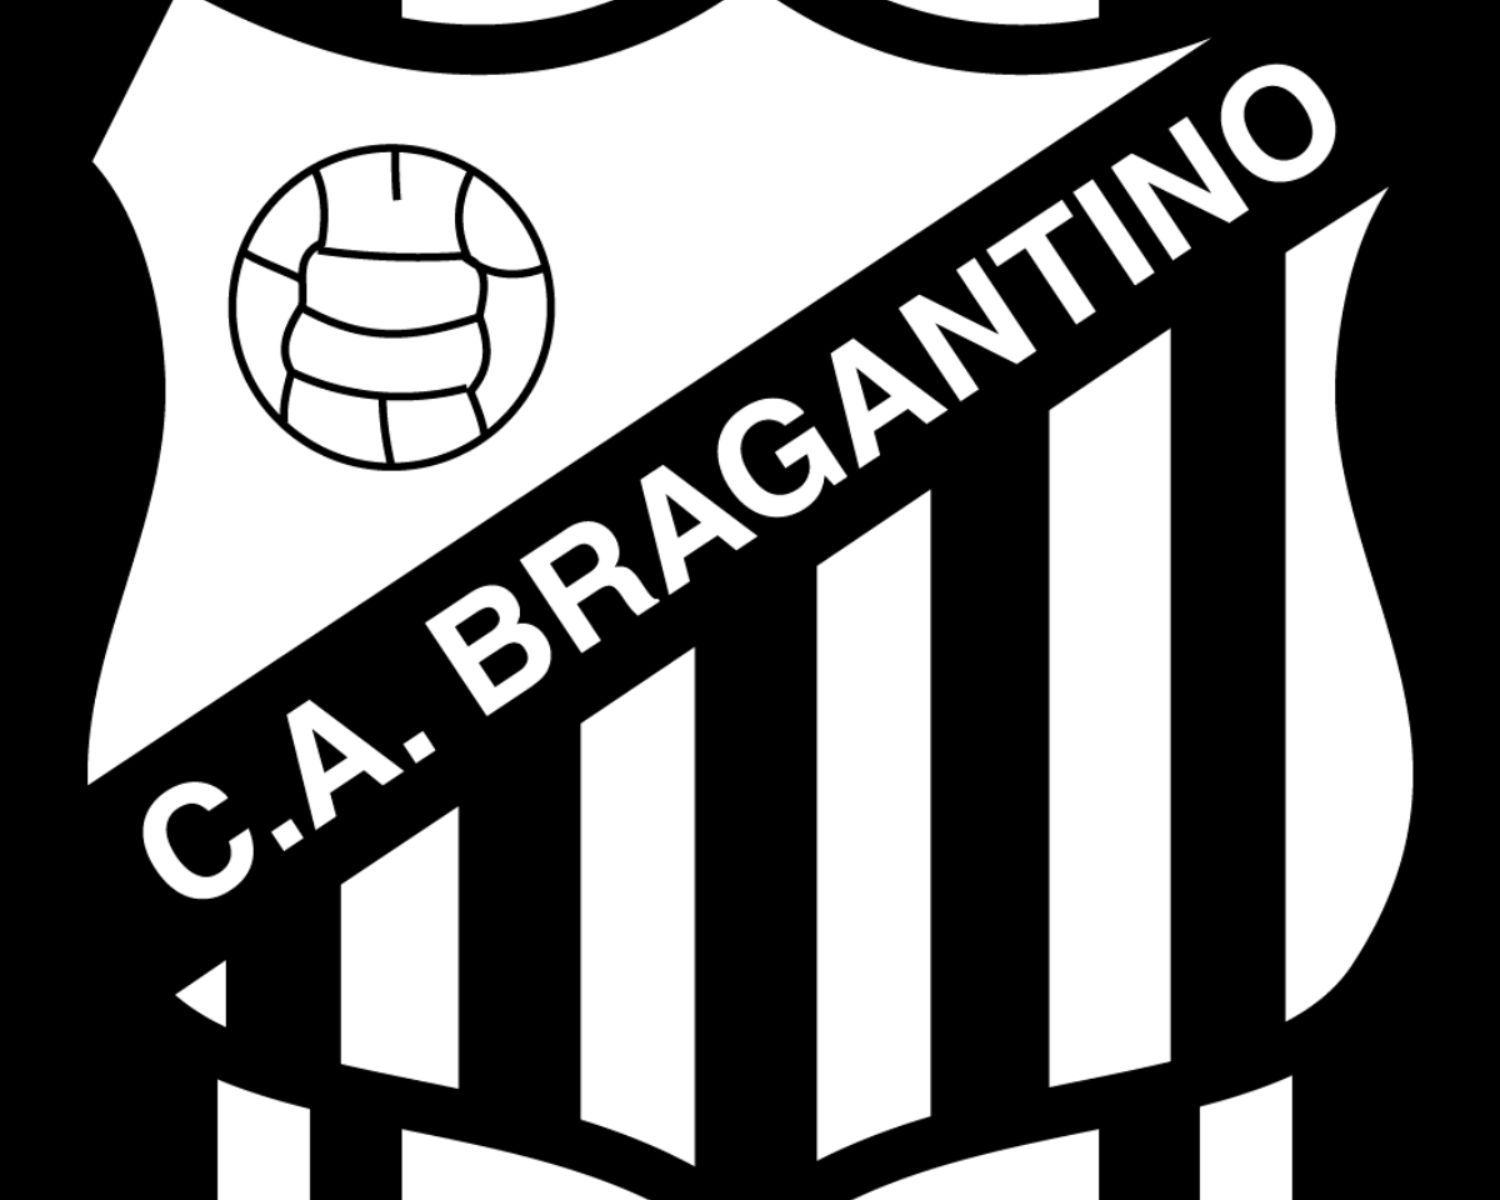 ca-bragantino-14-football-club-facts